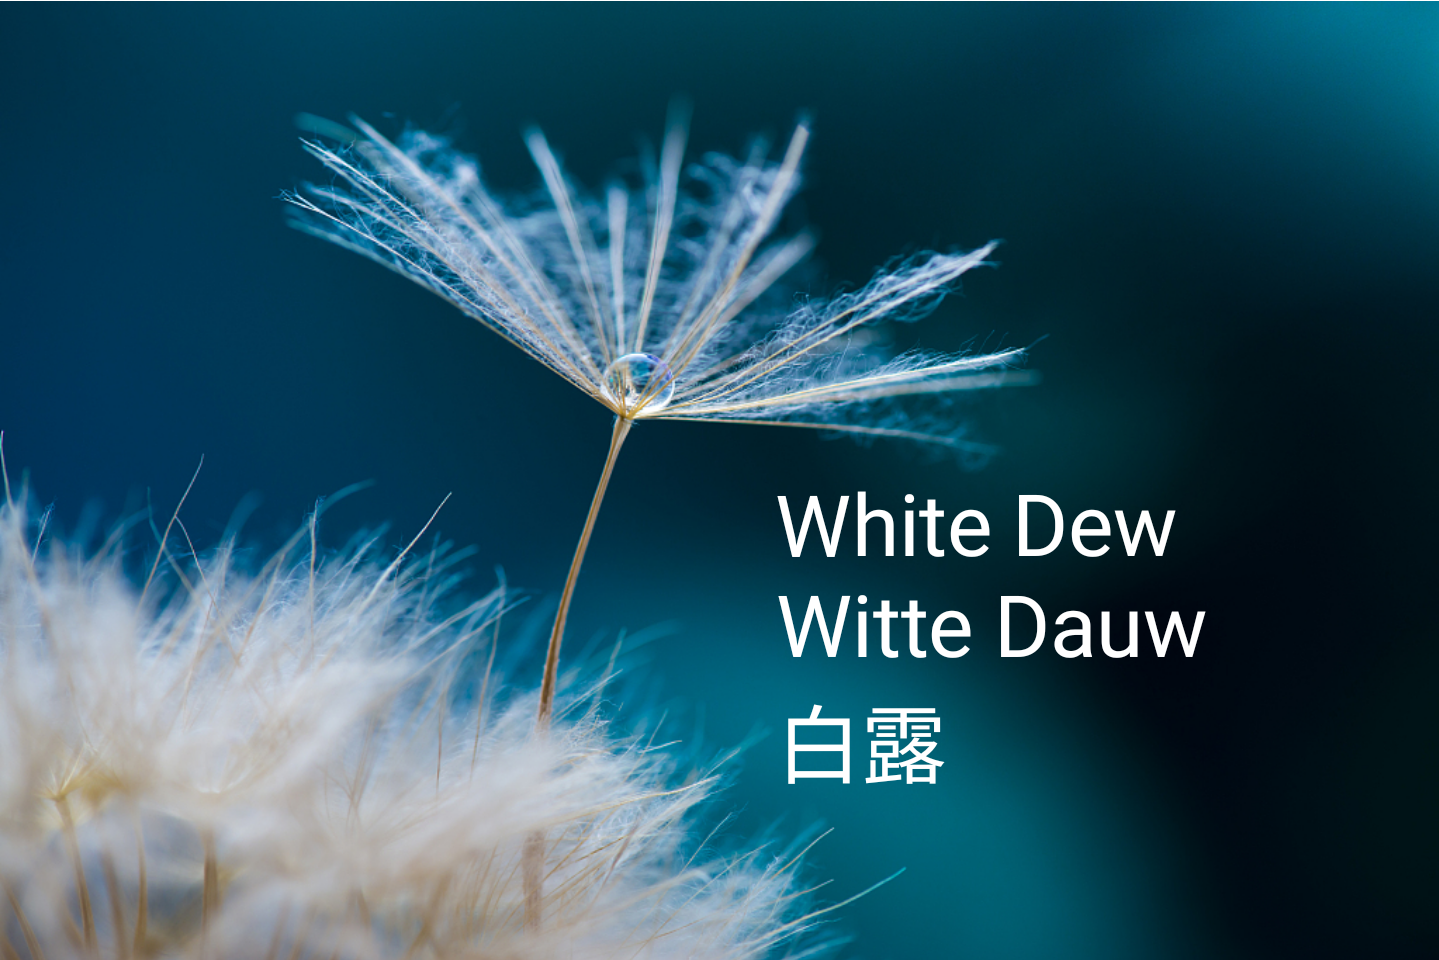 白露 Bai lu "Witte Dauw"